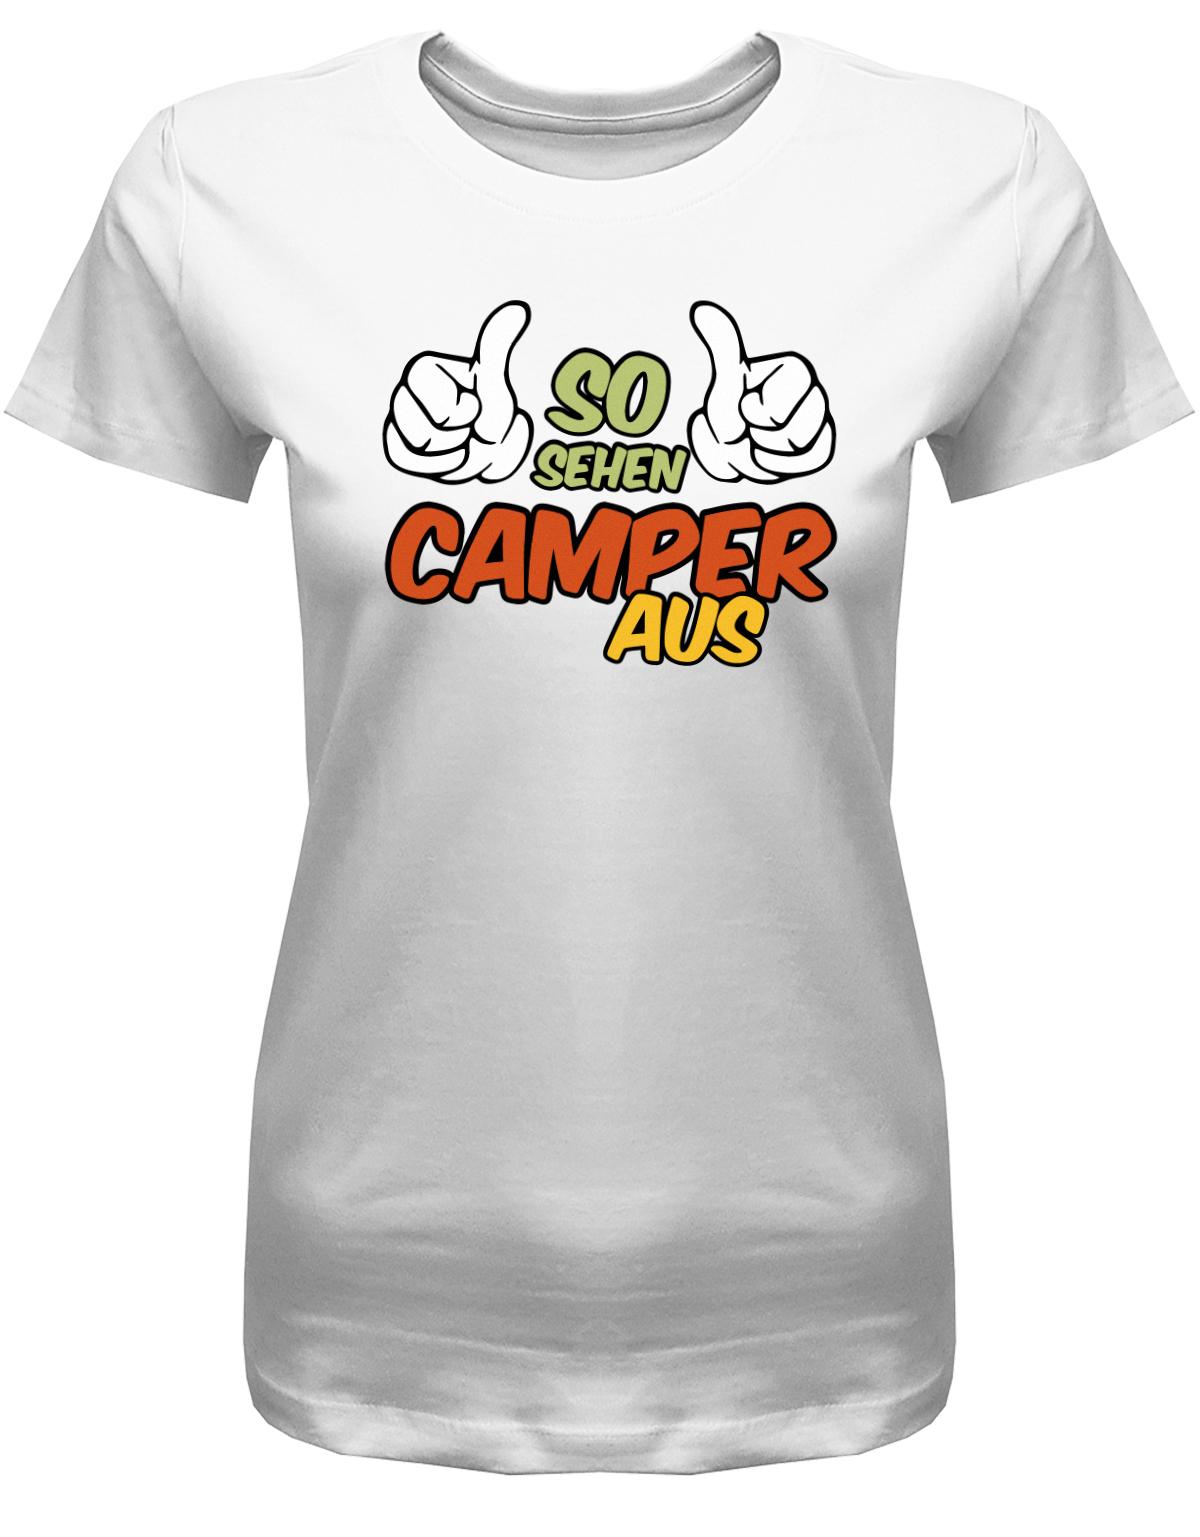 So-sehen-Camper-aus-Damen-Camping-Shirt-Weiss7KaYYoaoY8iMJ